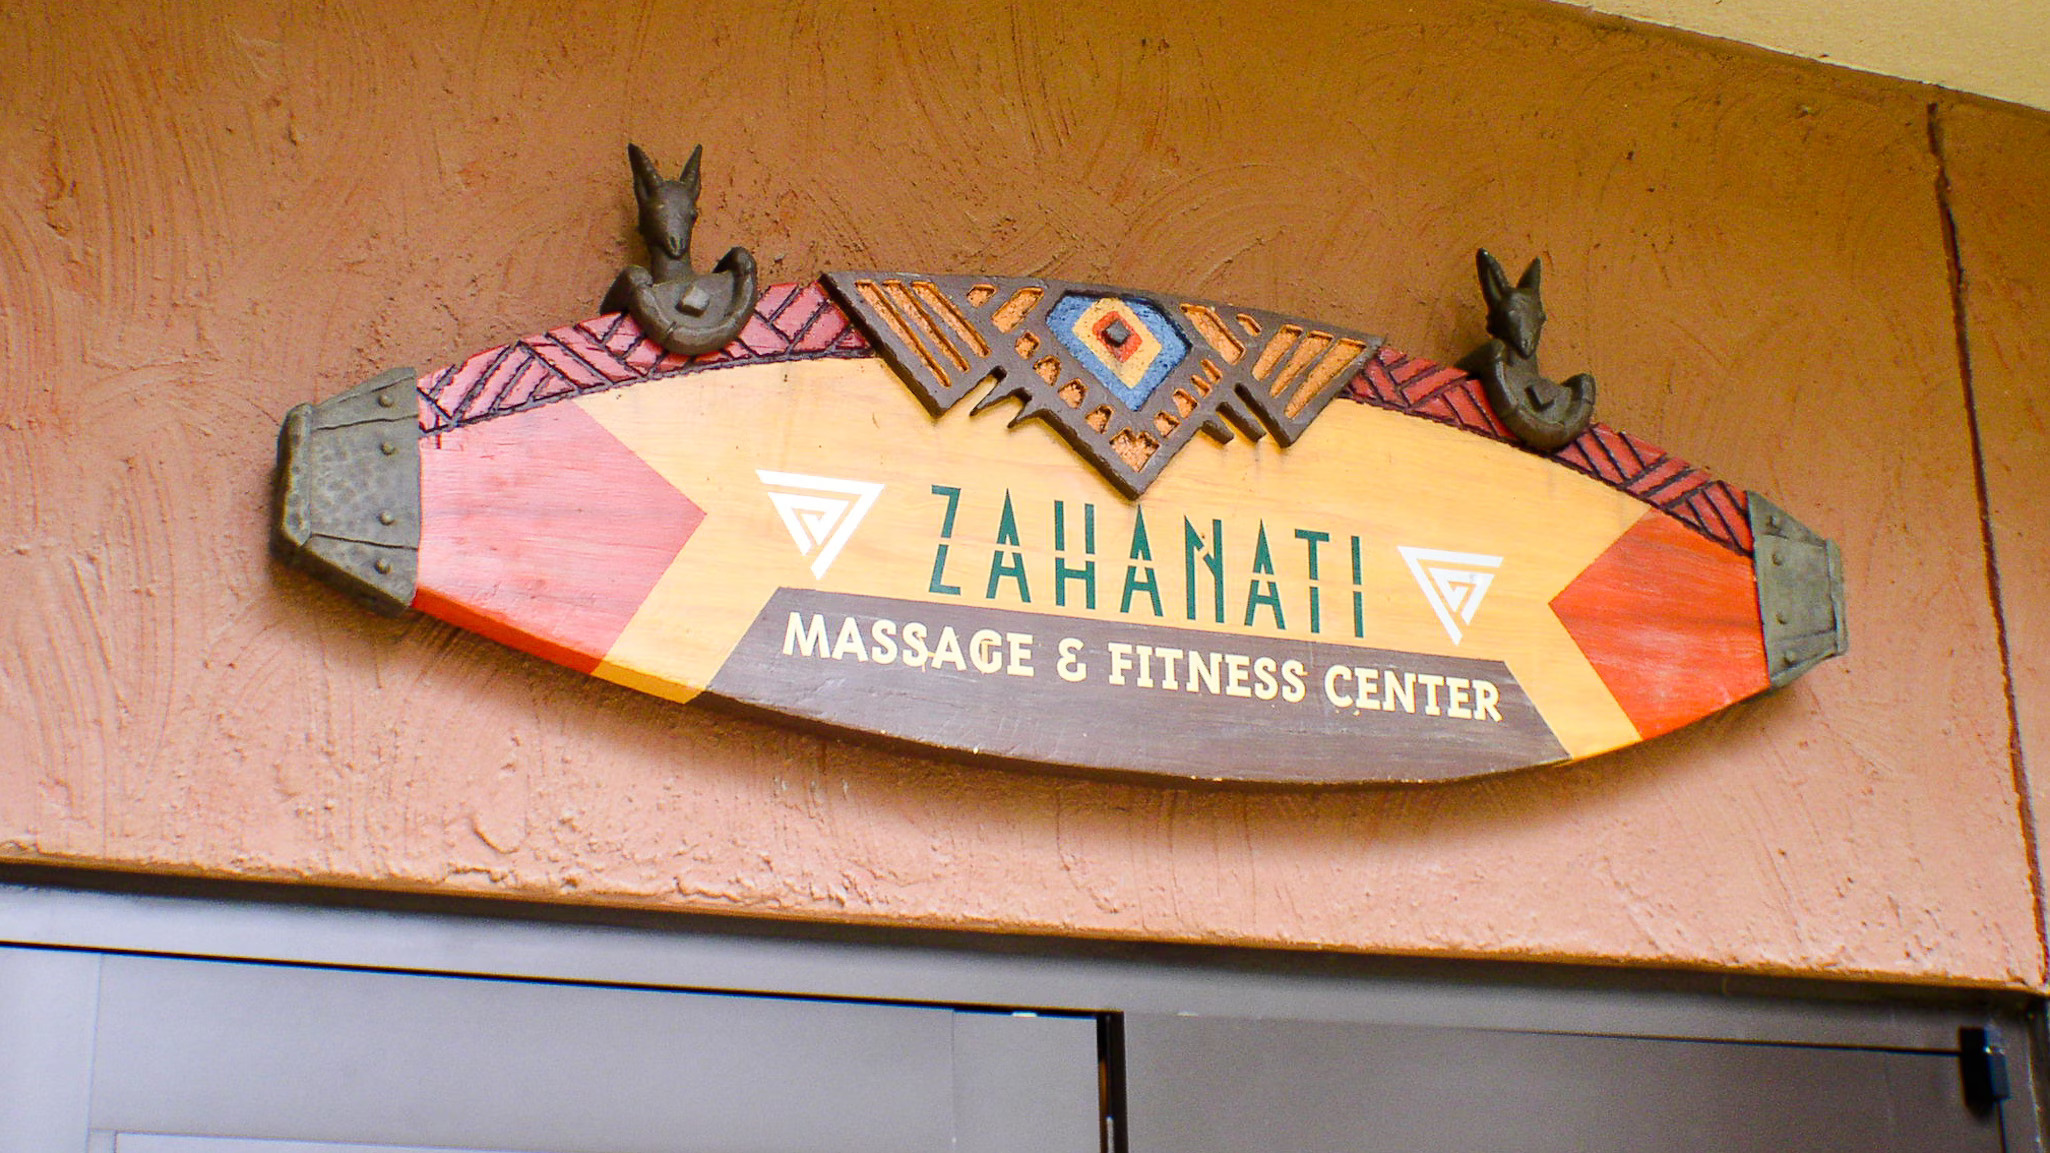 Zahanati Massage & Fitness Center at Disney's Animal Kingdom Villas